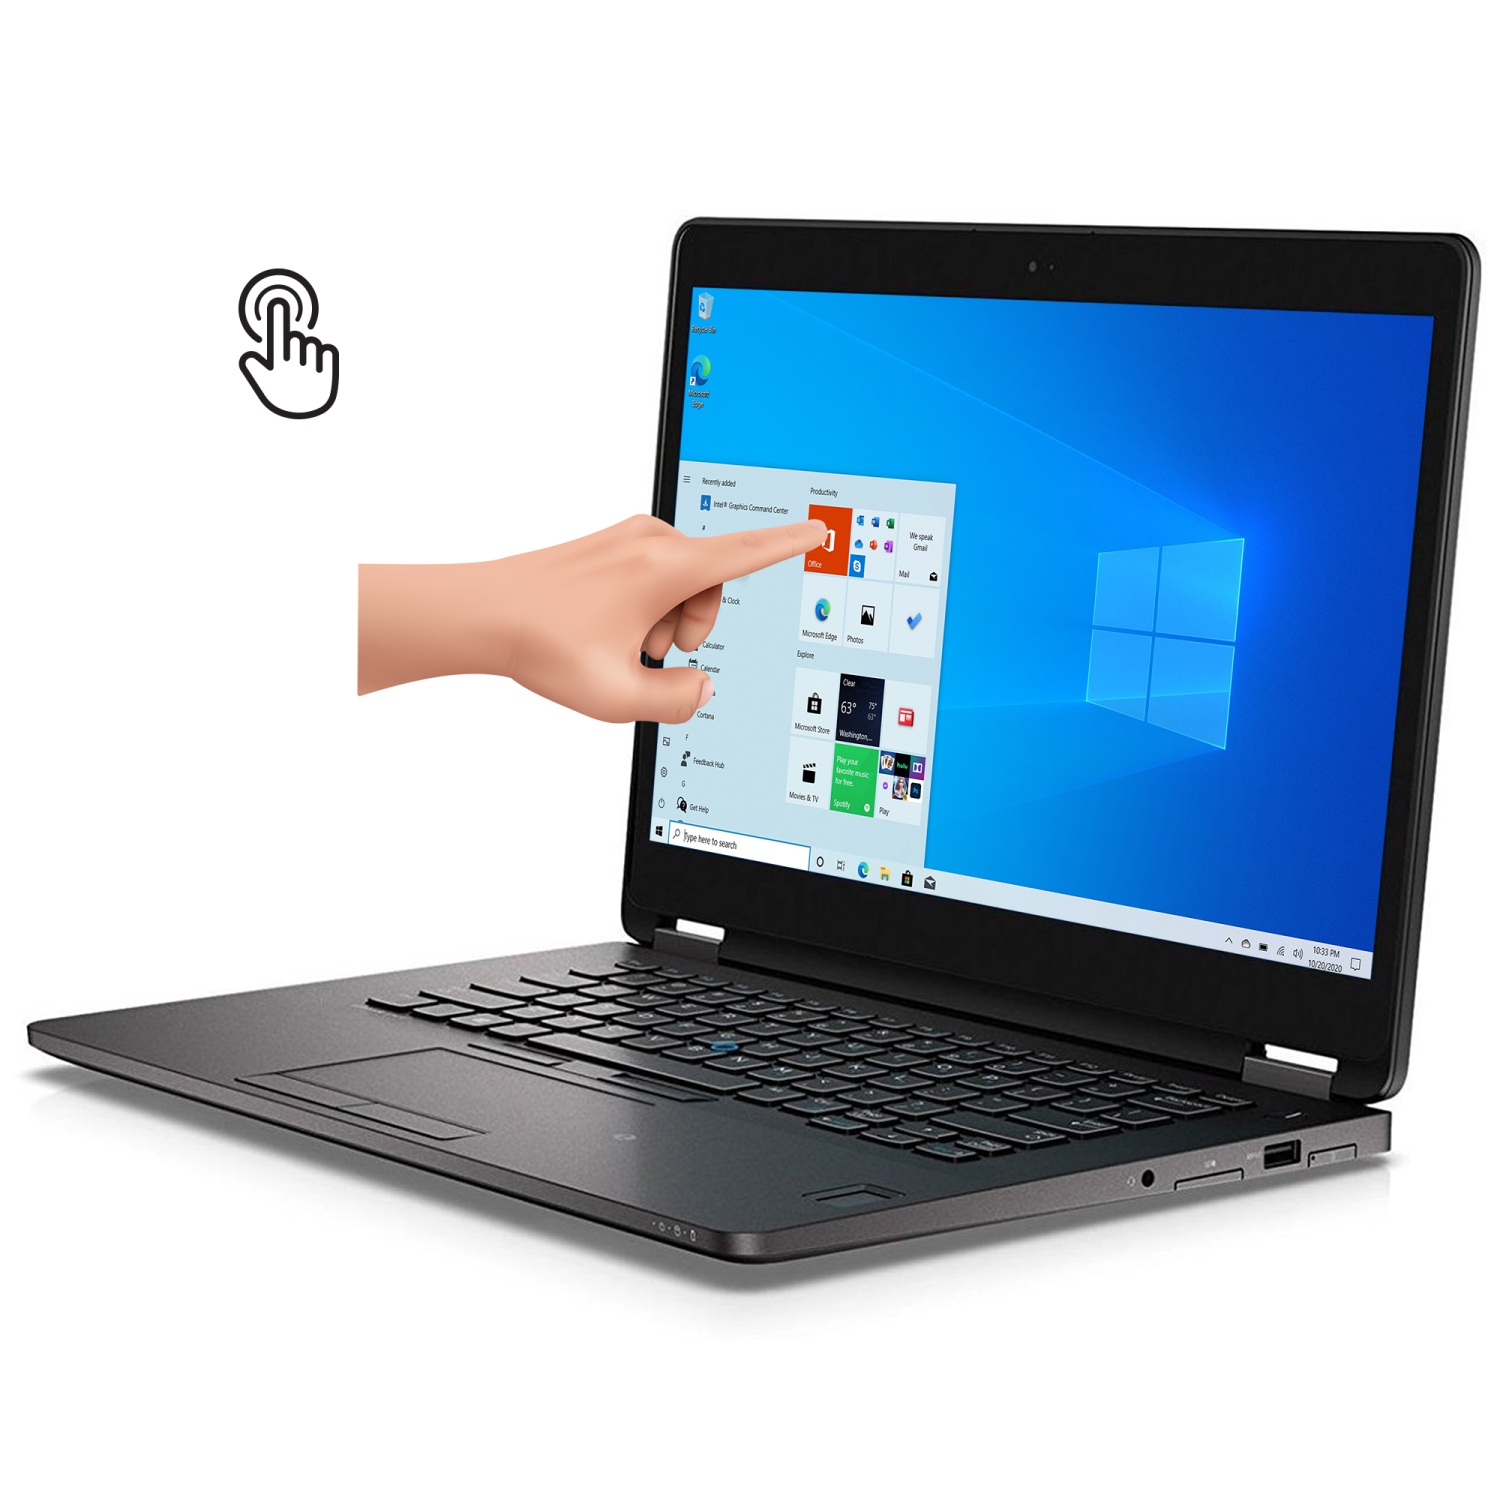 Refurbished (Good) - Dell Latitude E7470 - 14" QHD Touch Screen Laptop | Intel i7 6600U upto 3.40GHz | Webcam | Backlit keyboard | 16GB RAM 512GB SSD| Win 10 Pro-